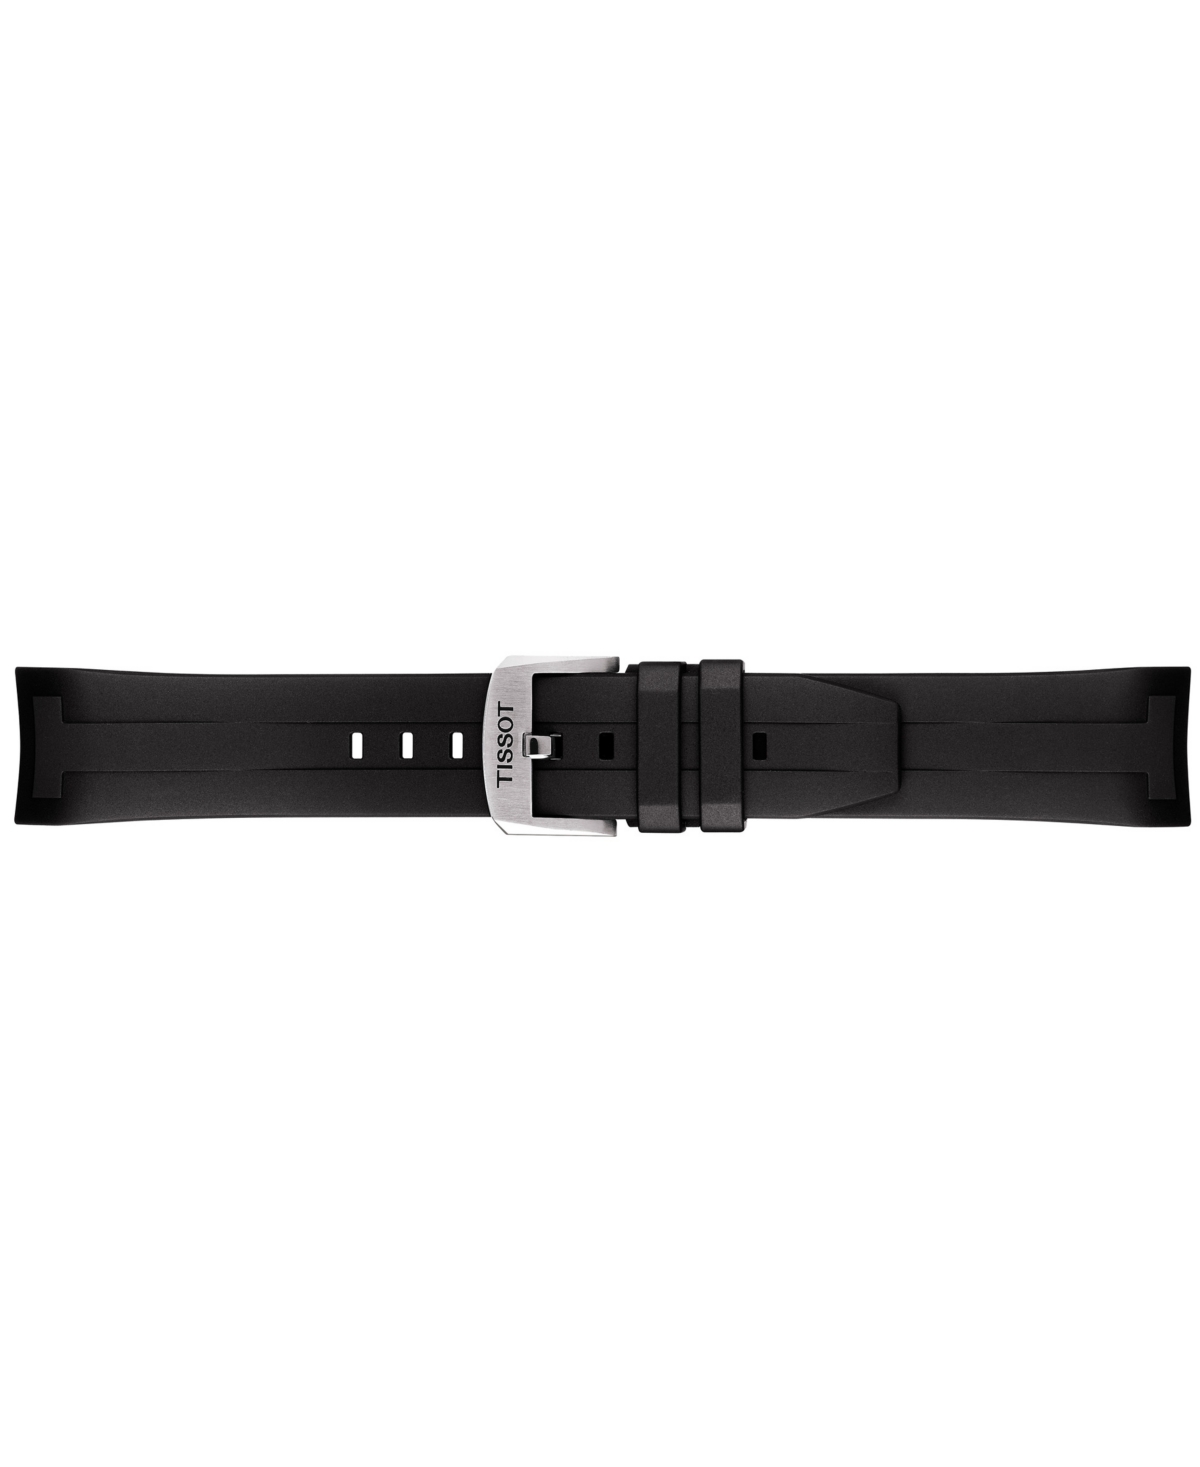 Shop Tissot Men's Swiss Chronograph Seastar 1000 Black Rubber Strap Watch 46mm